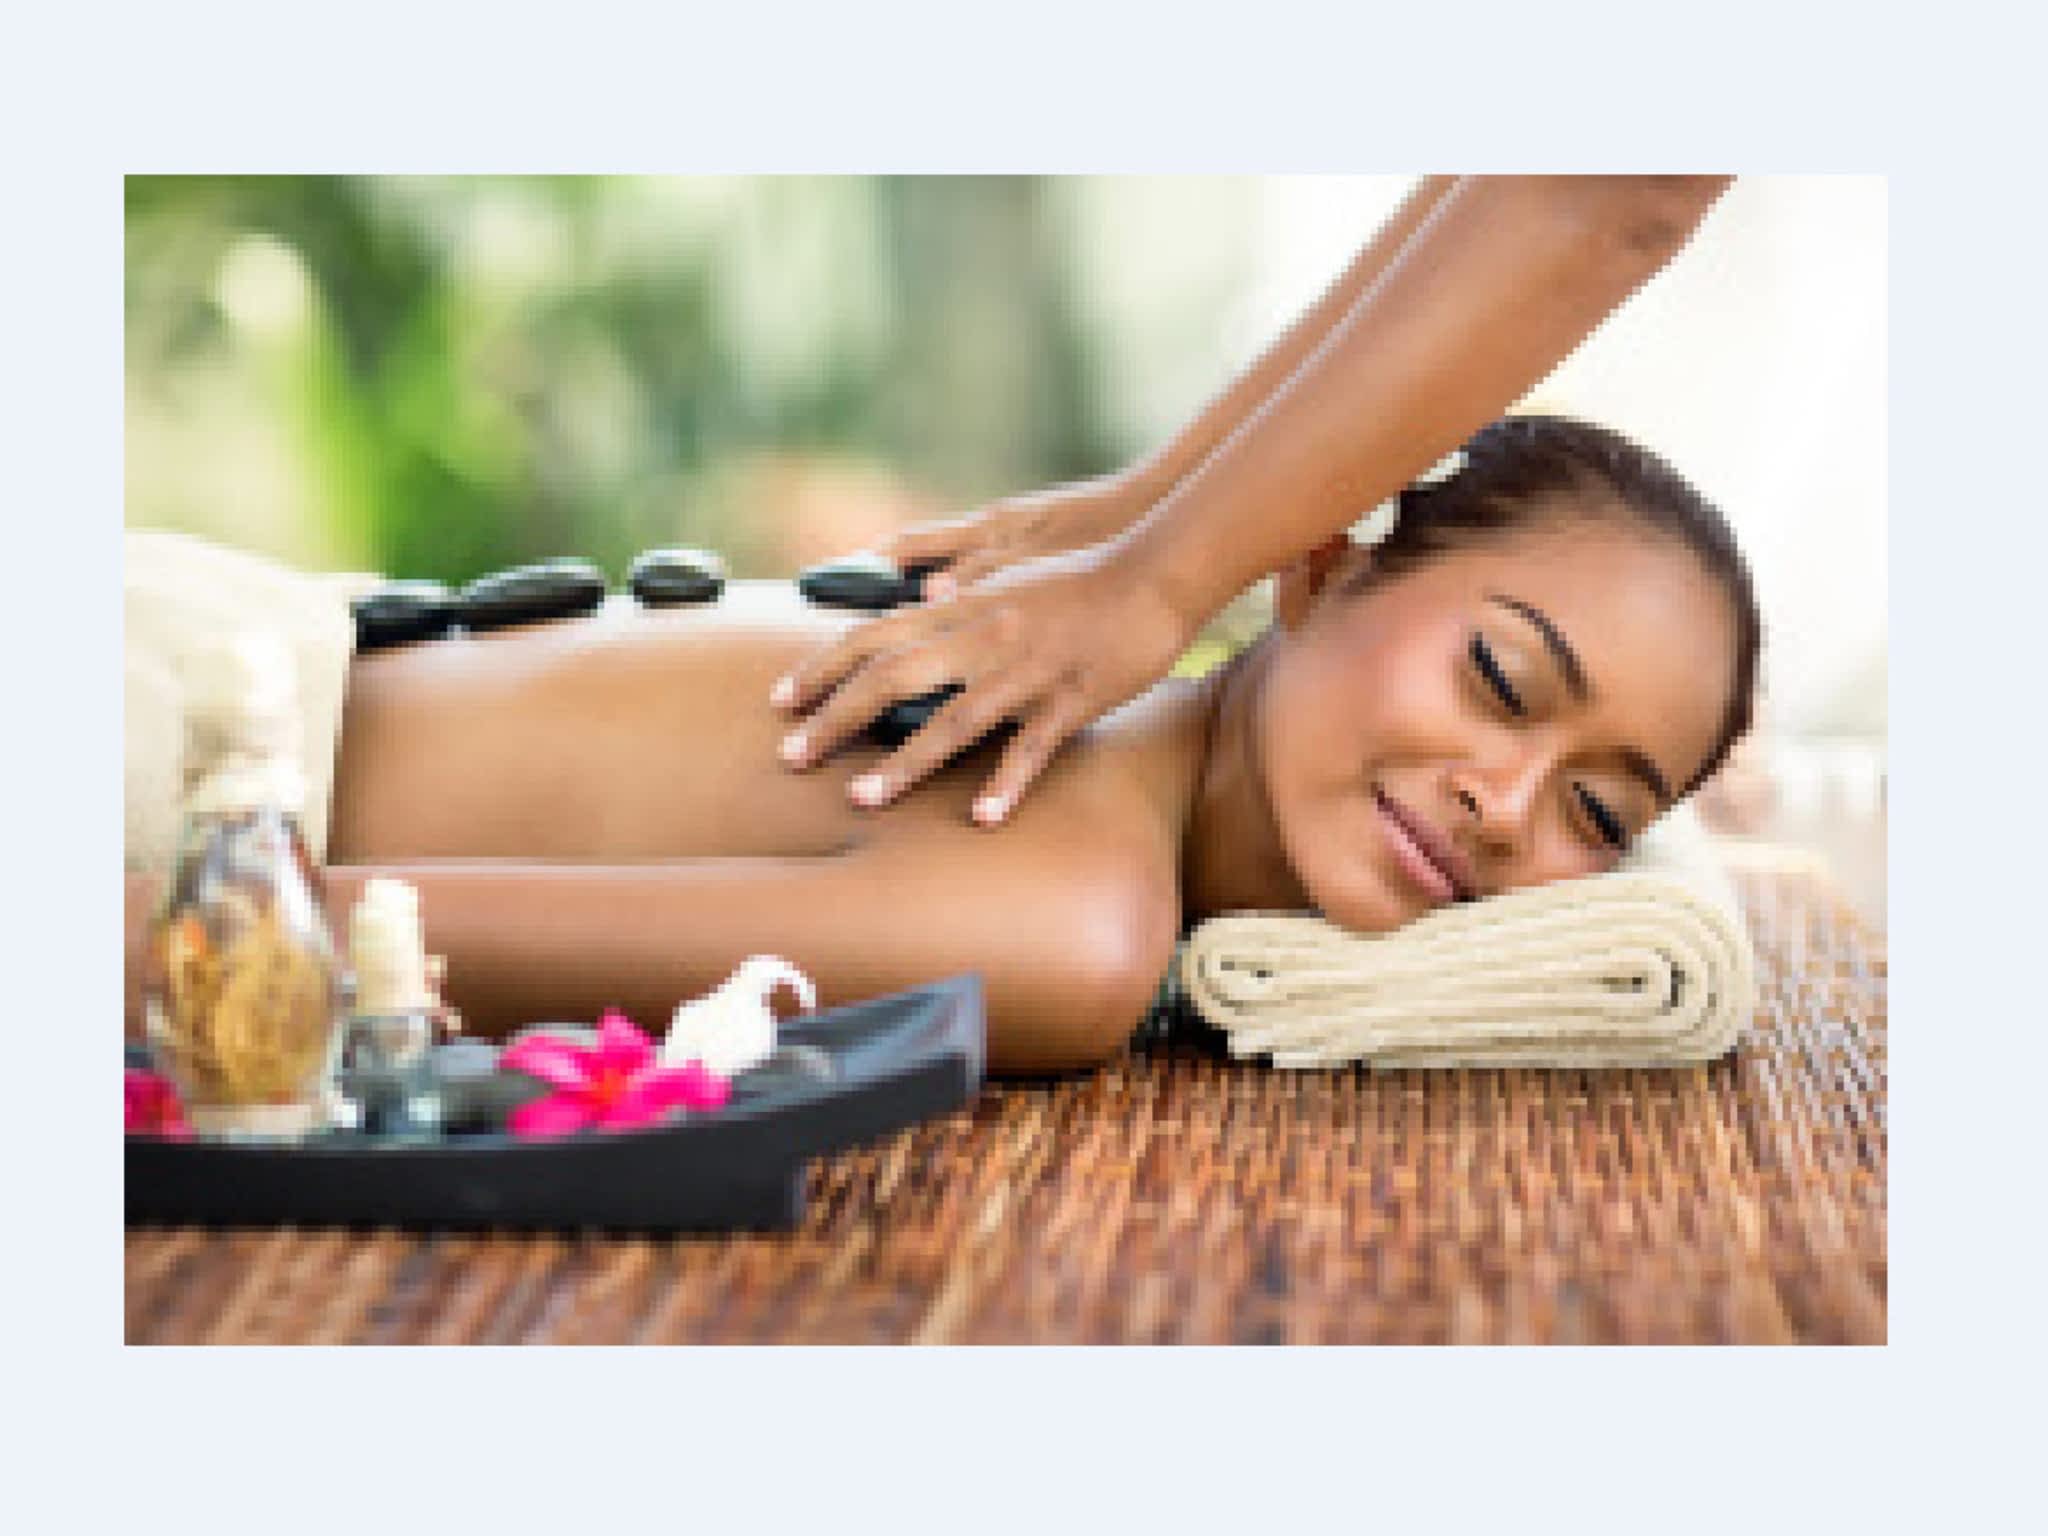 photo Massage Therapy Clinic